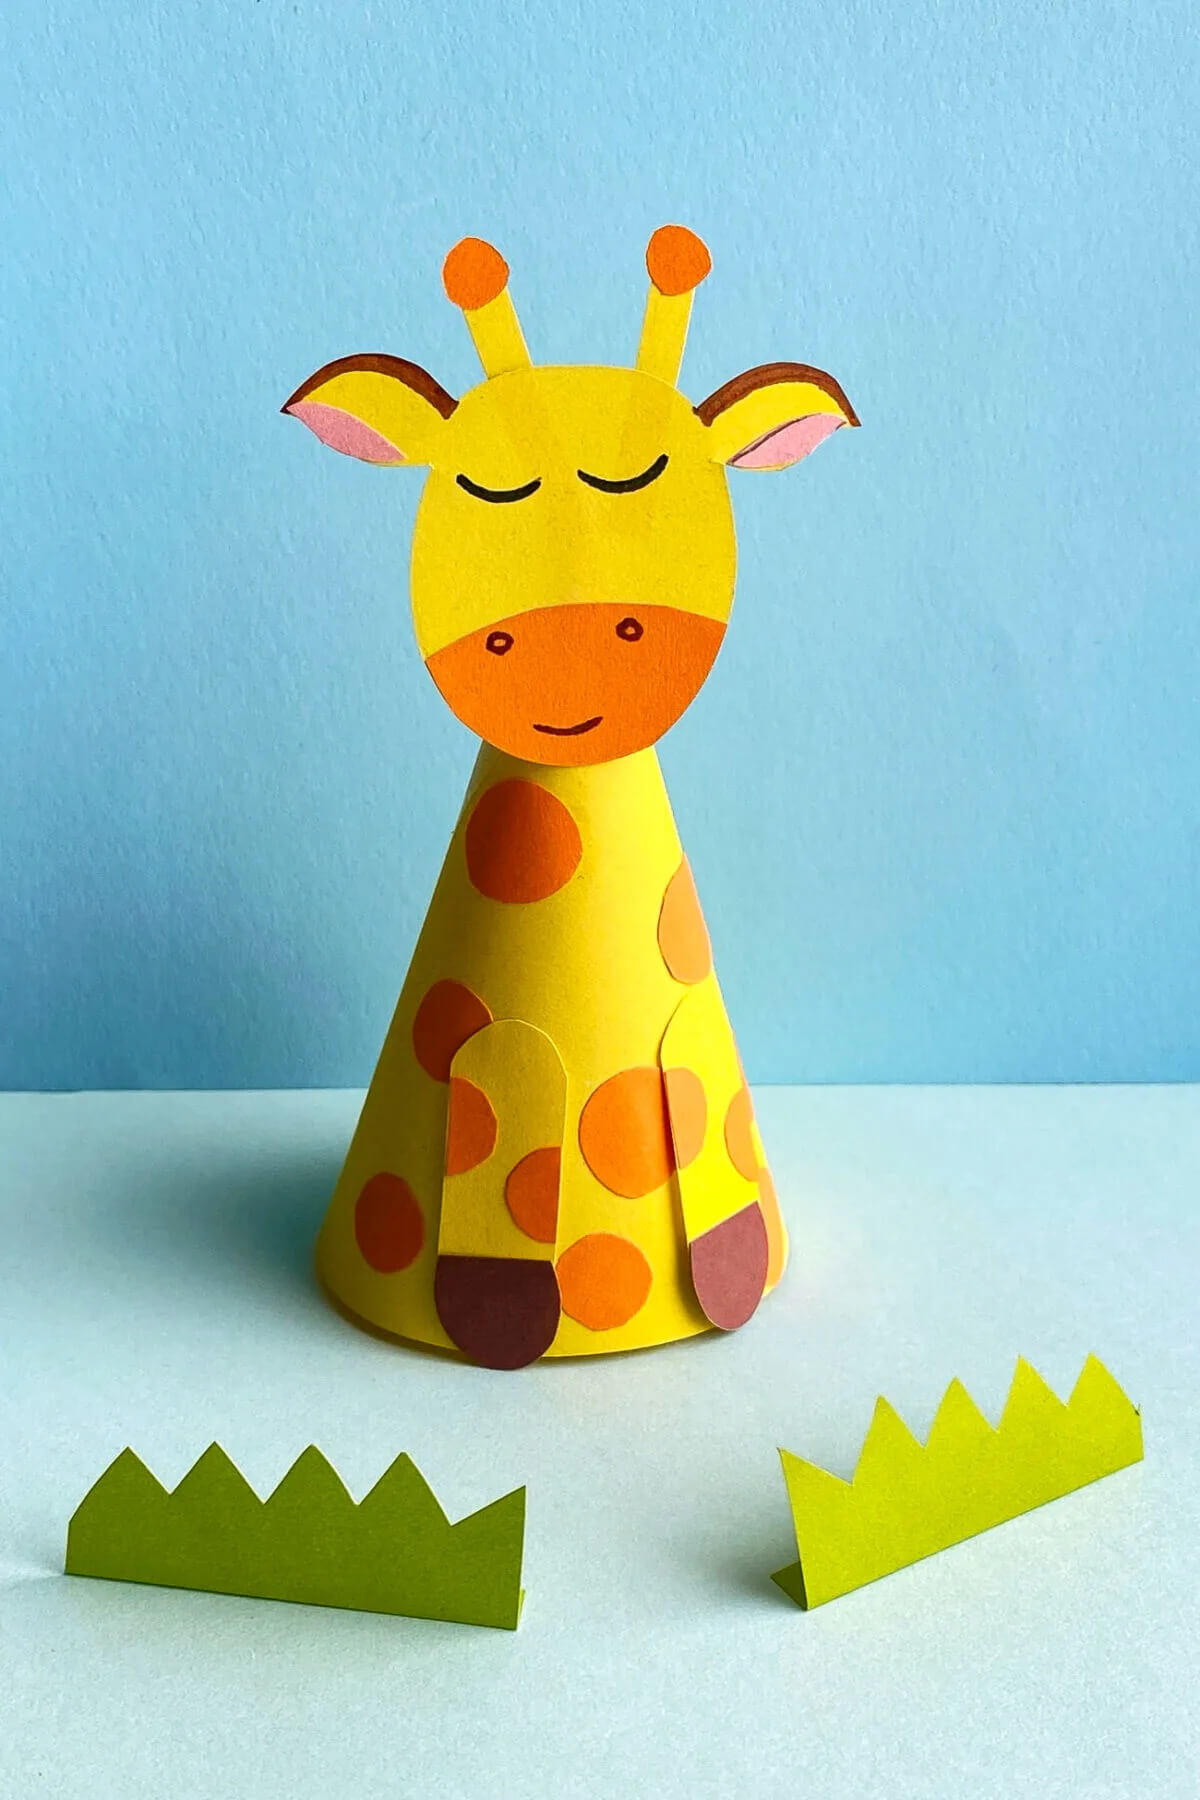 Super Fun Giraffe Craft For Kids To Make